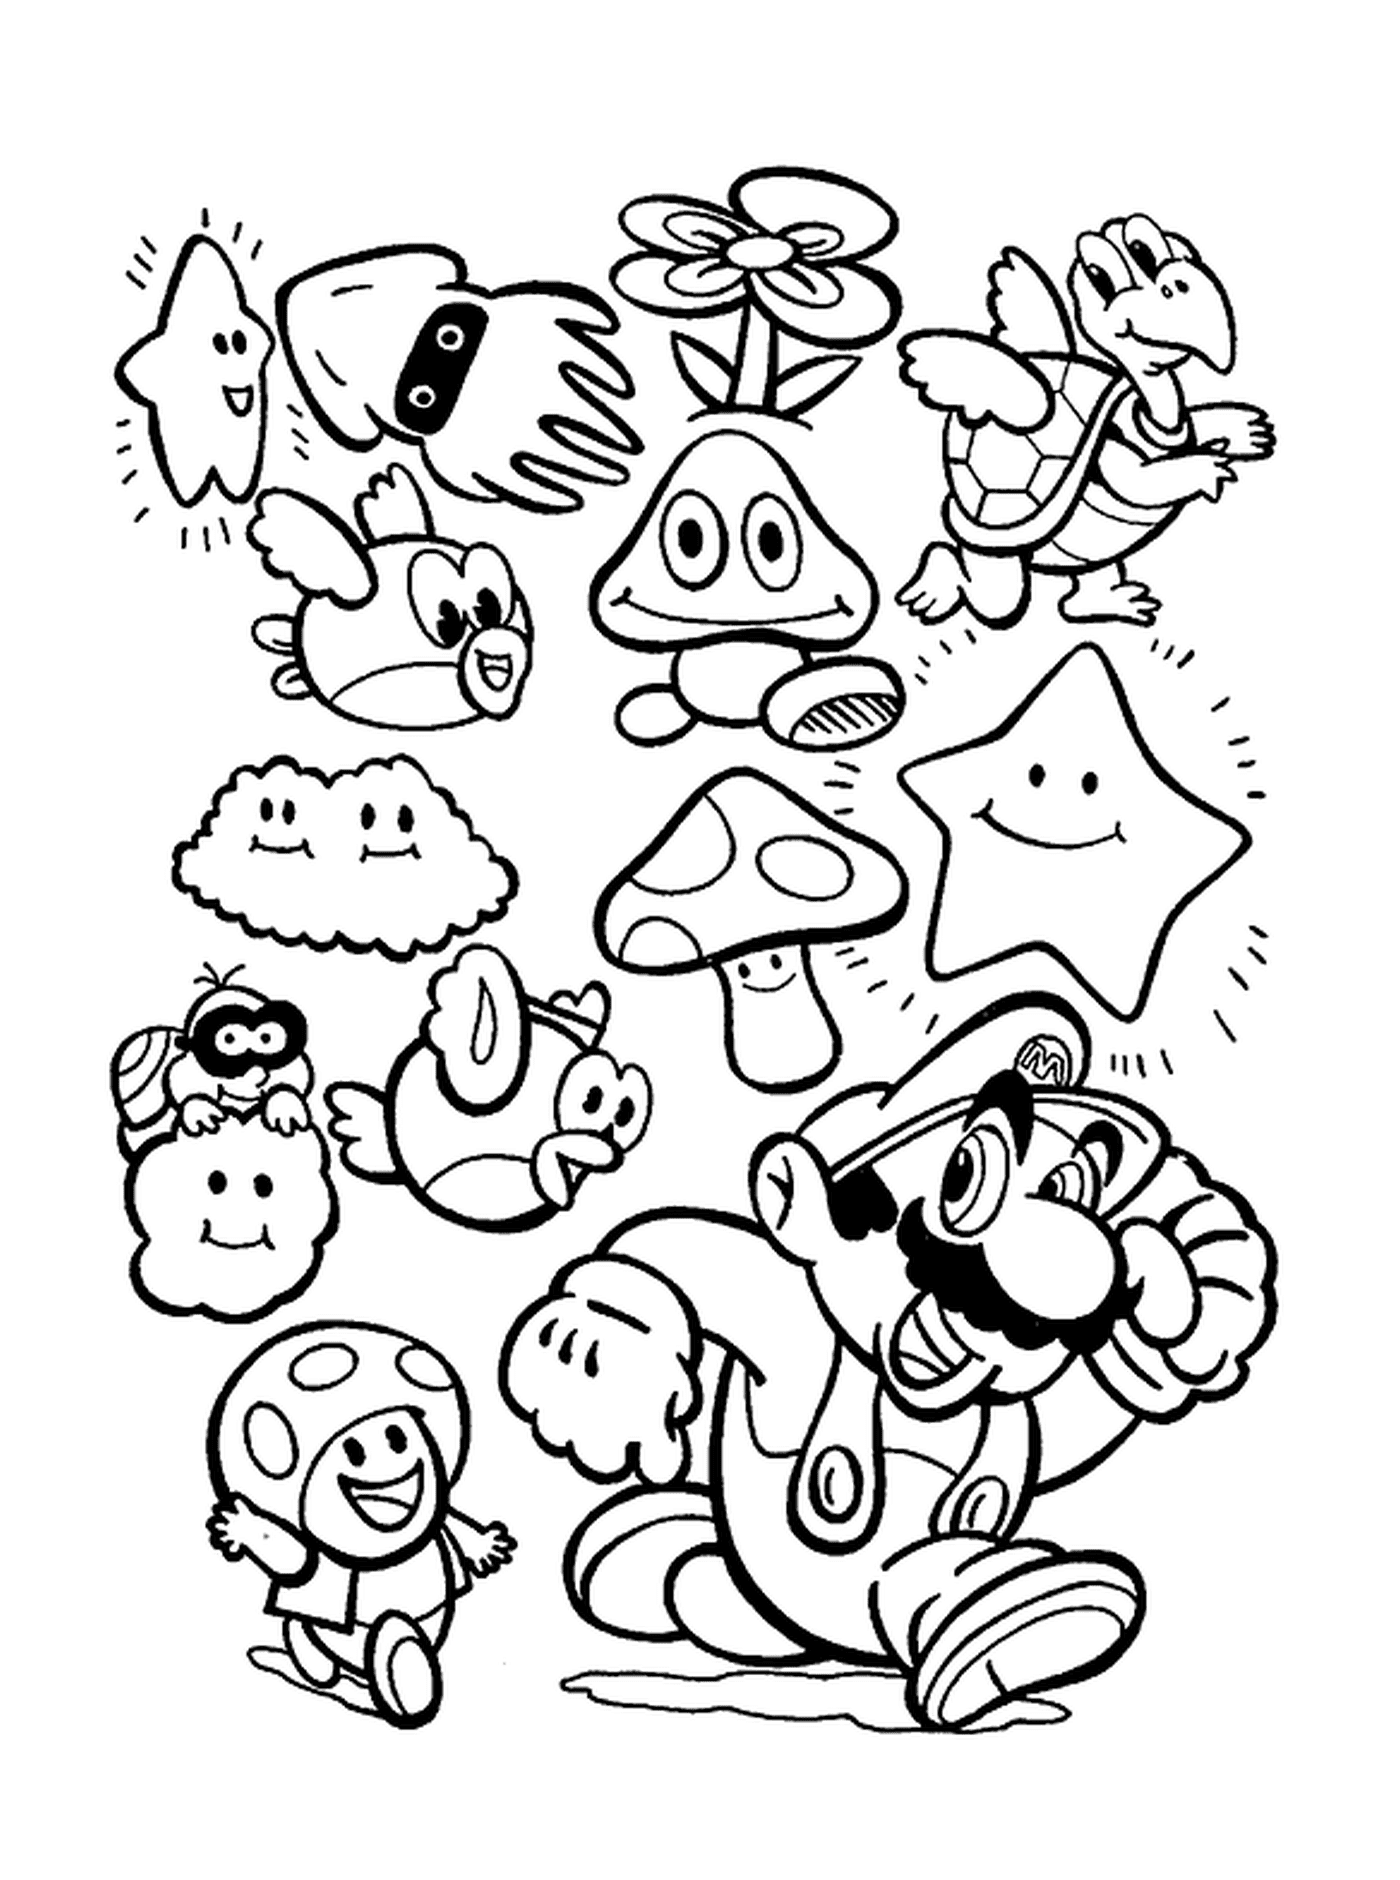  Os personagens de Mario se unem 